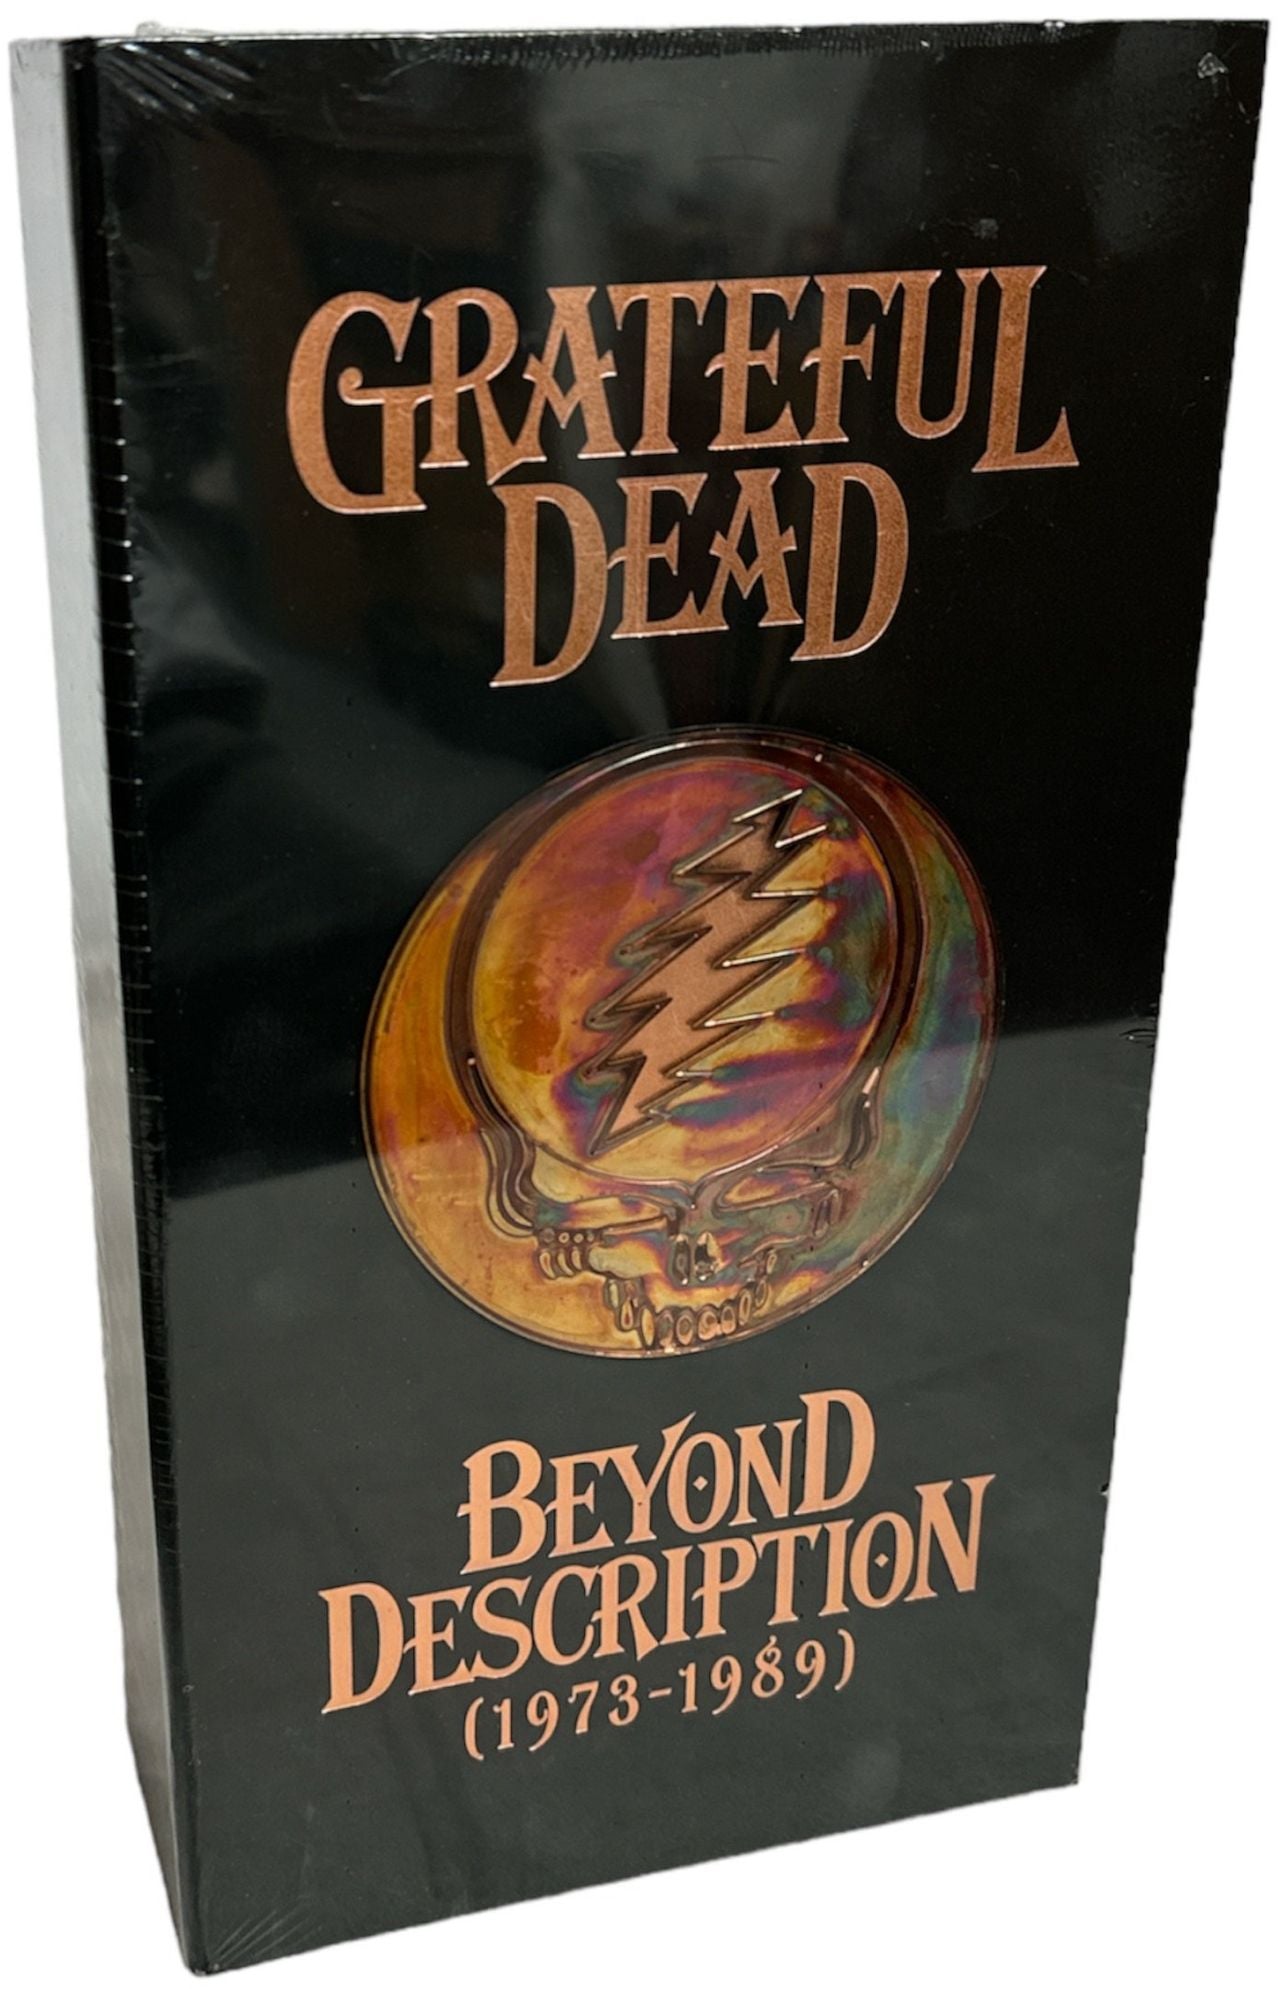 Grateful Dead Beyond Description 1973-1989 - Sealed UK Cd album box set